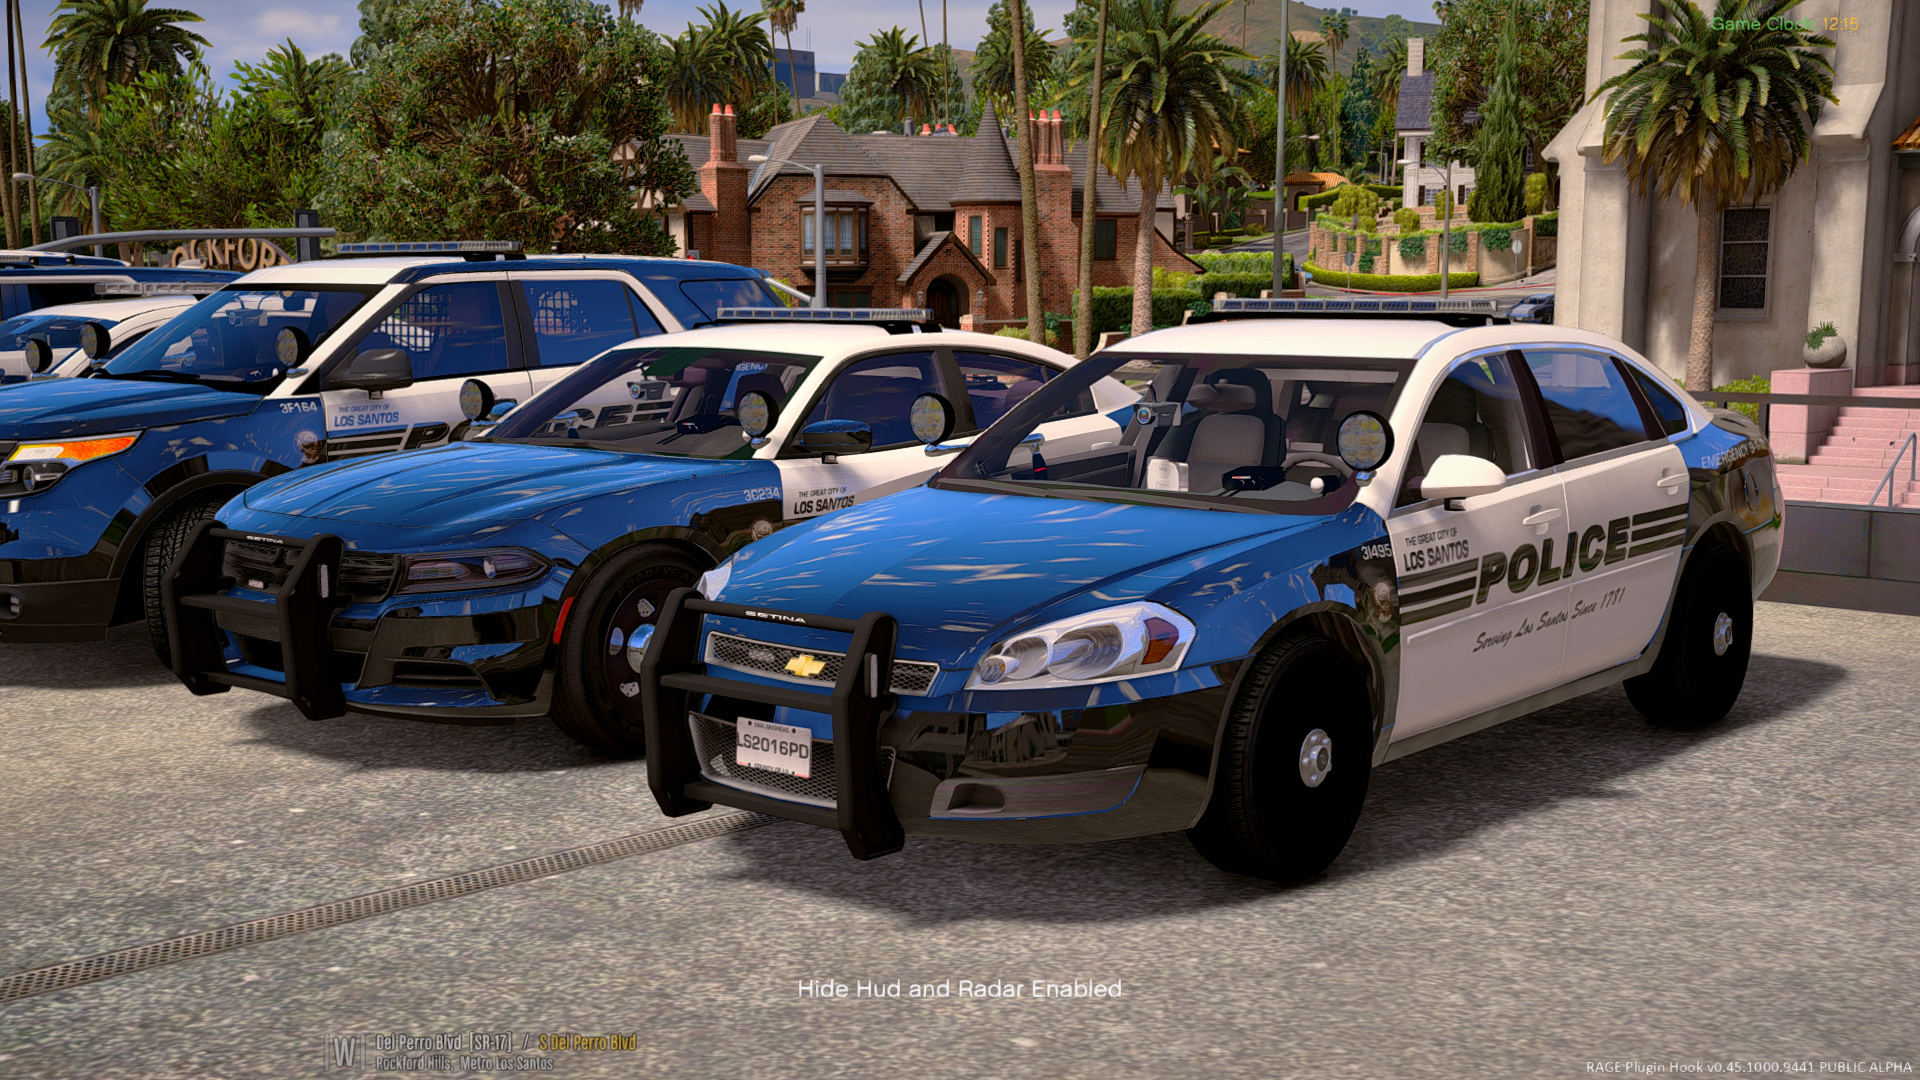 Пак полицейских машин. Police car. Honda CR-V Police. Dominican Republic car Police. Cactus's vehicle Pack.